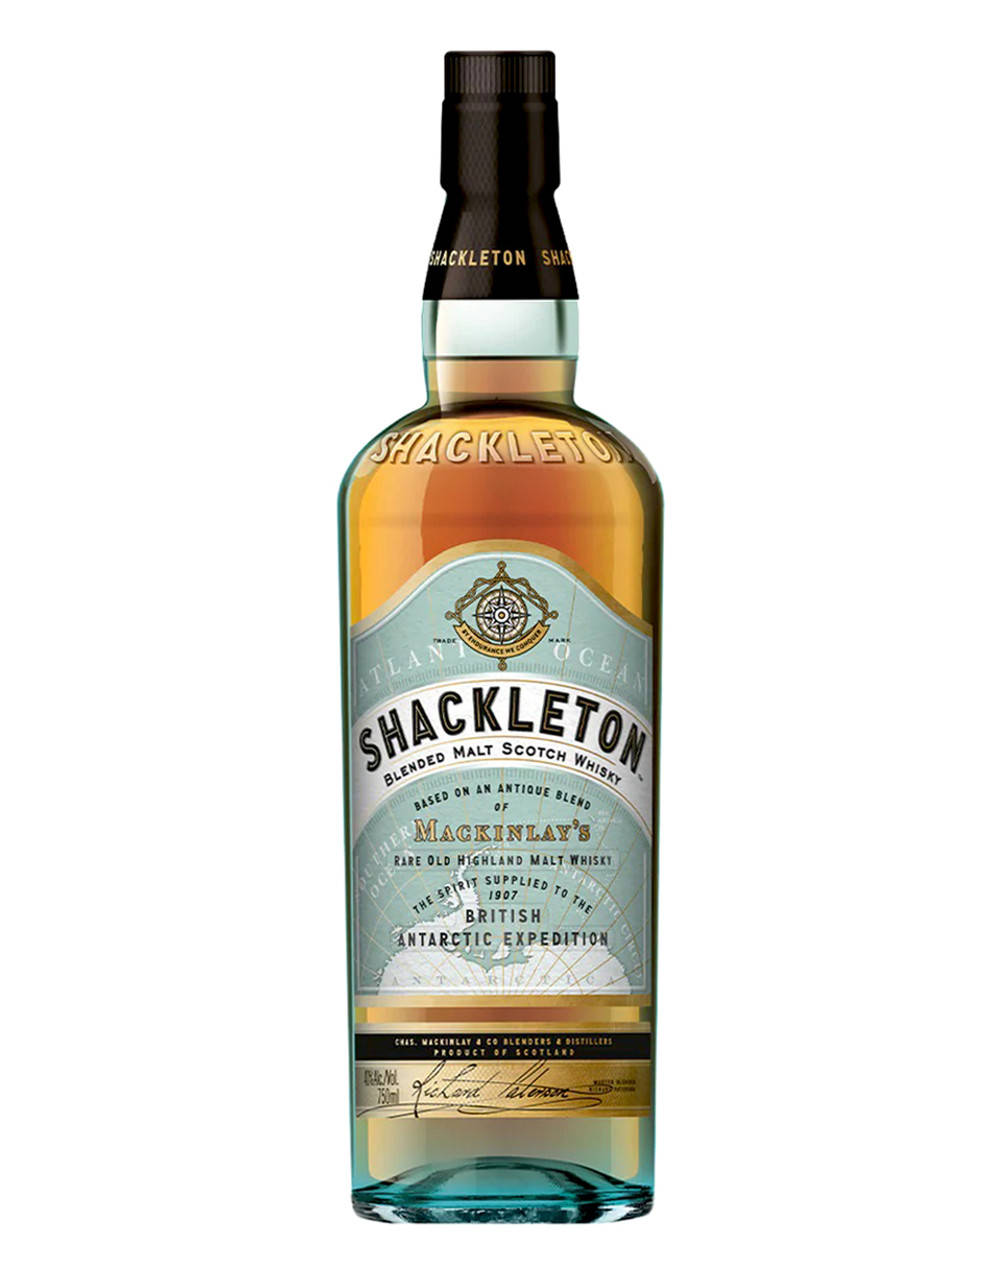 Shackleton Whisky Bottle Promotional Shot Wallpaper